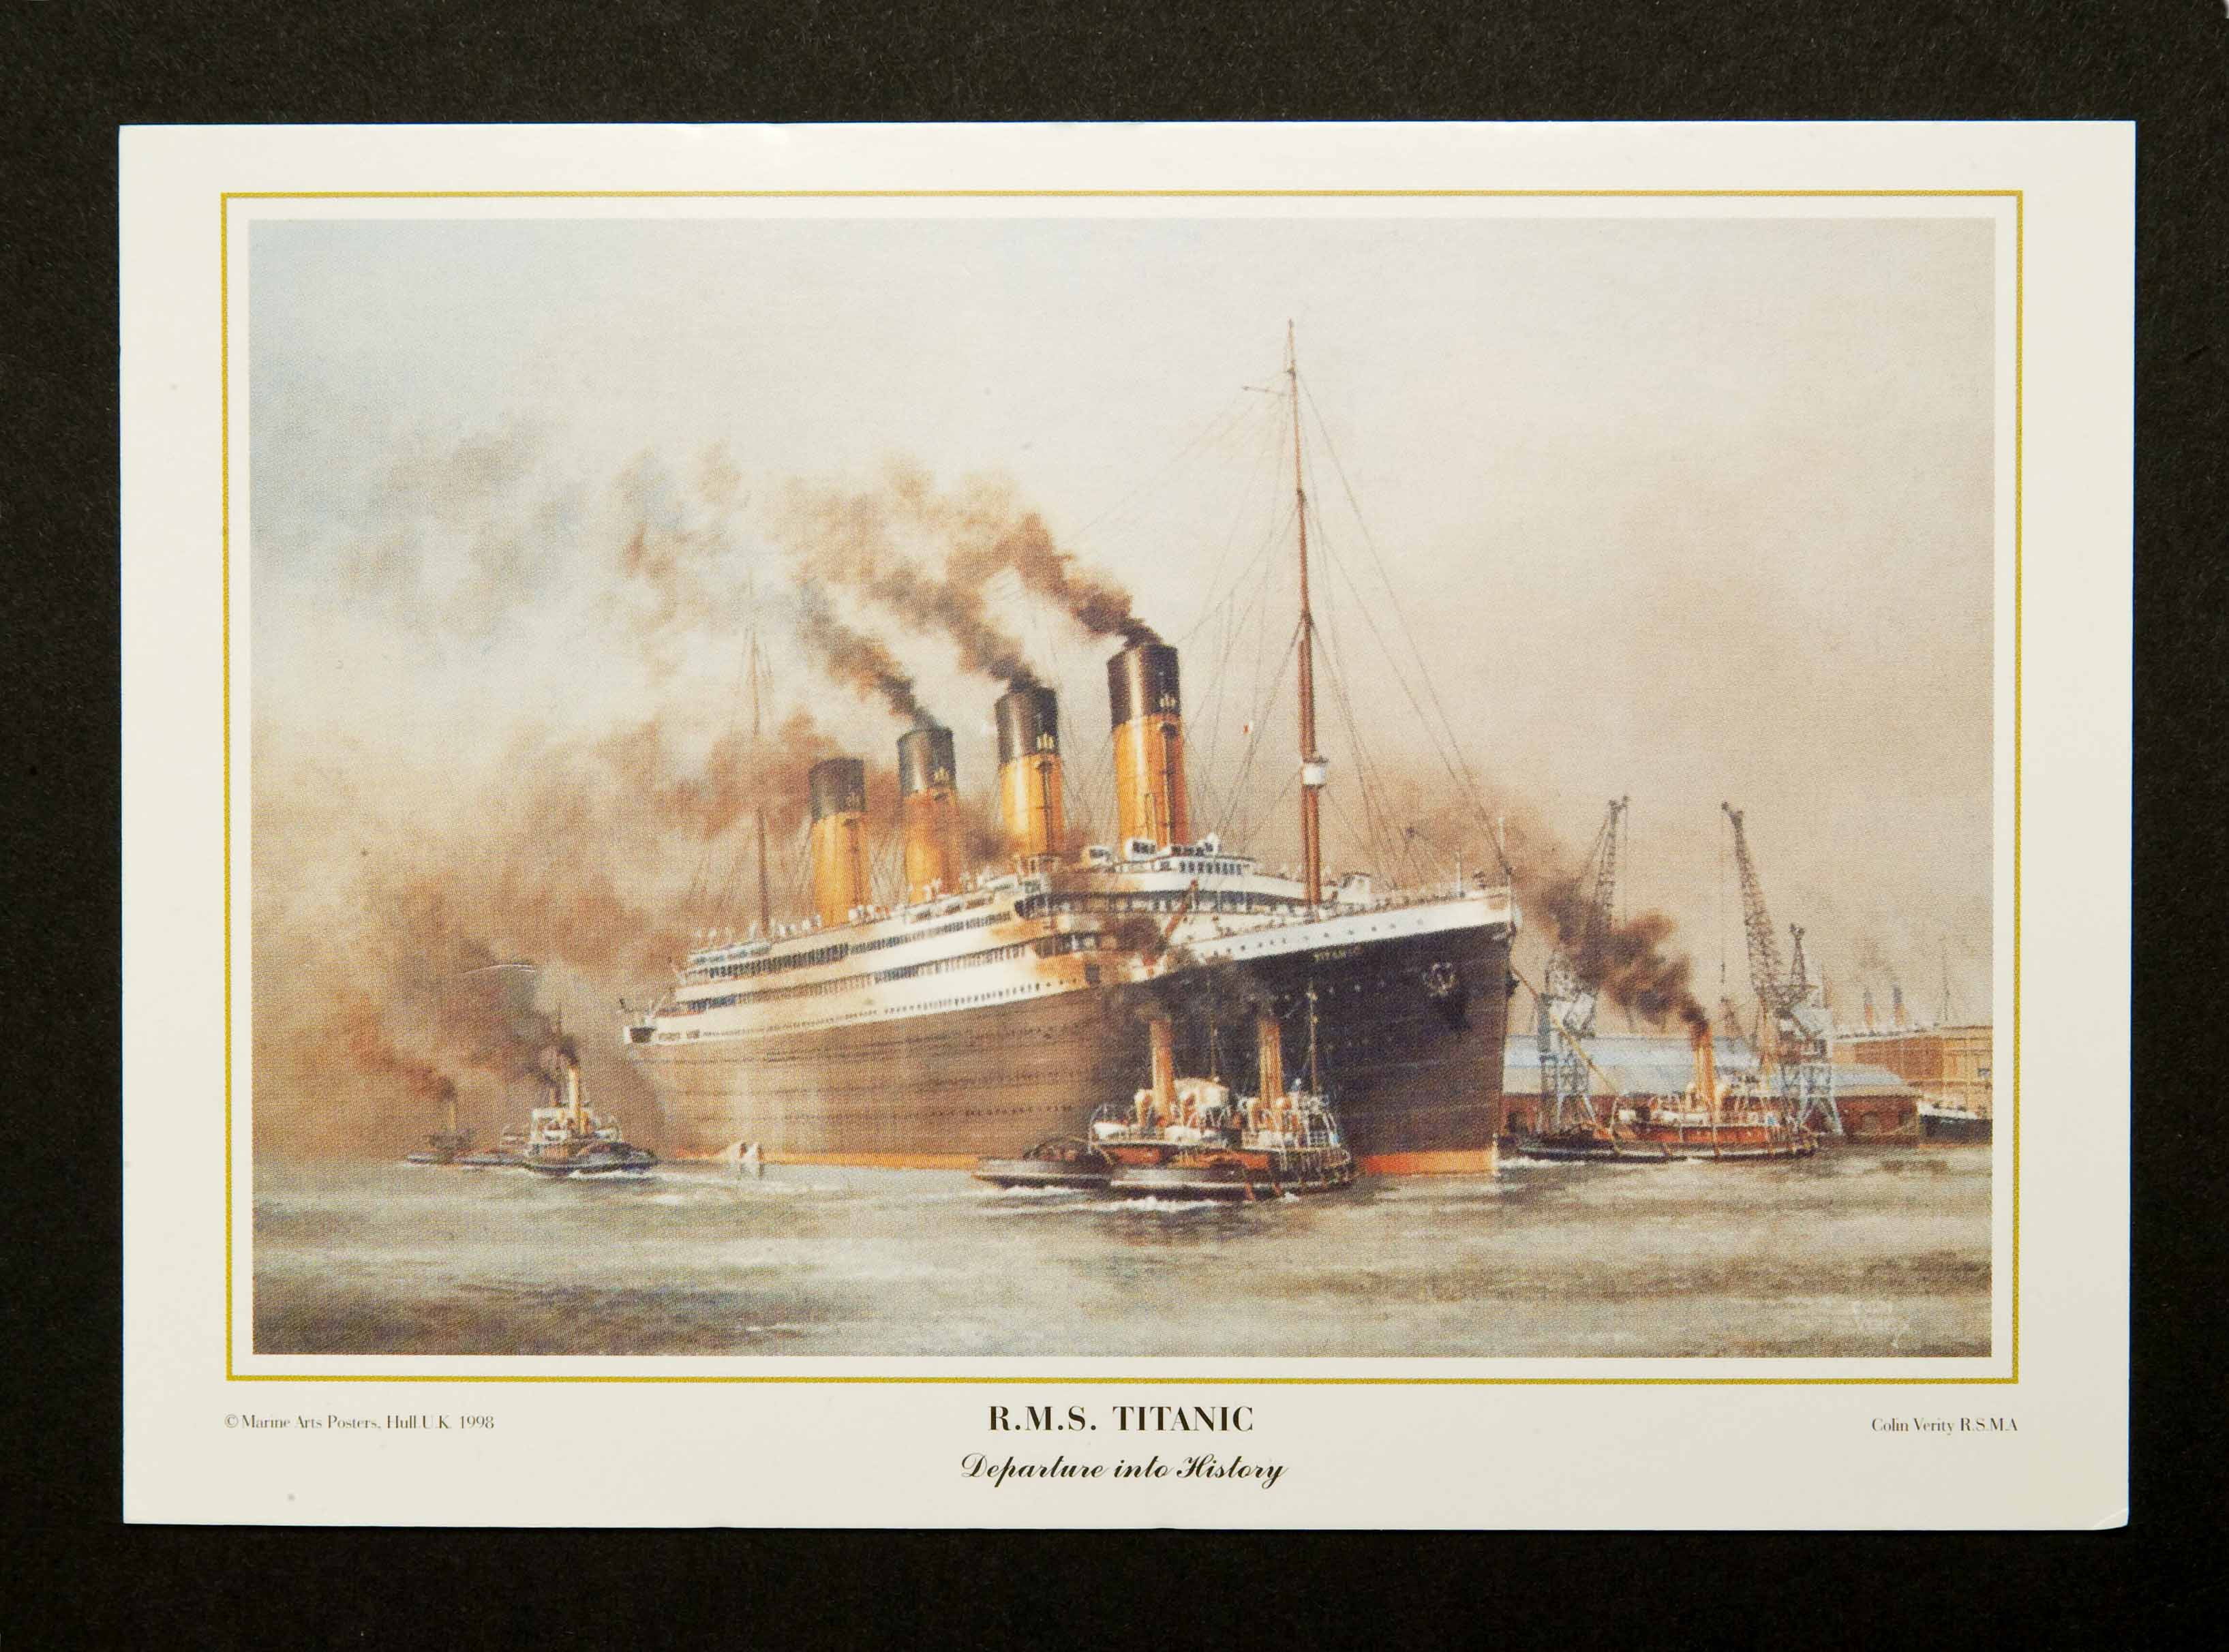 " R.M.S. Titanic" Departure into History Postcards (6)